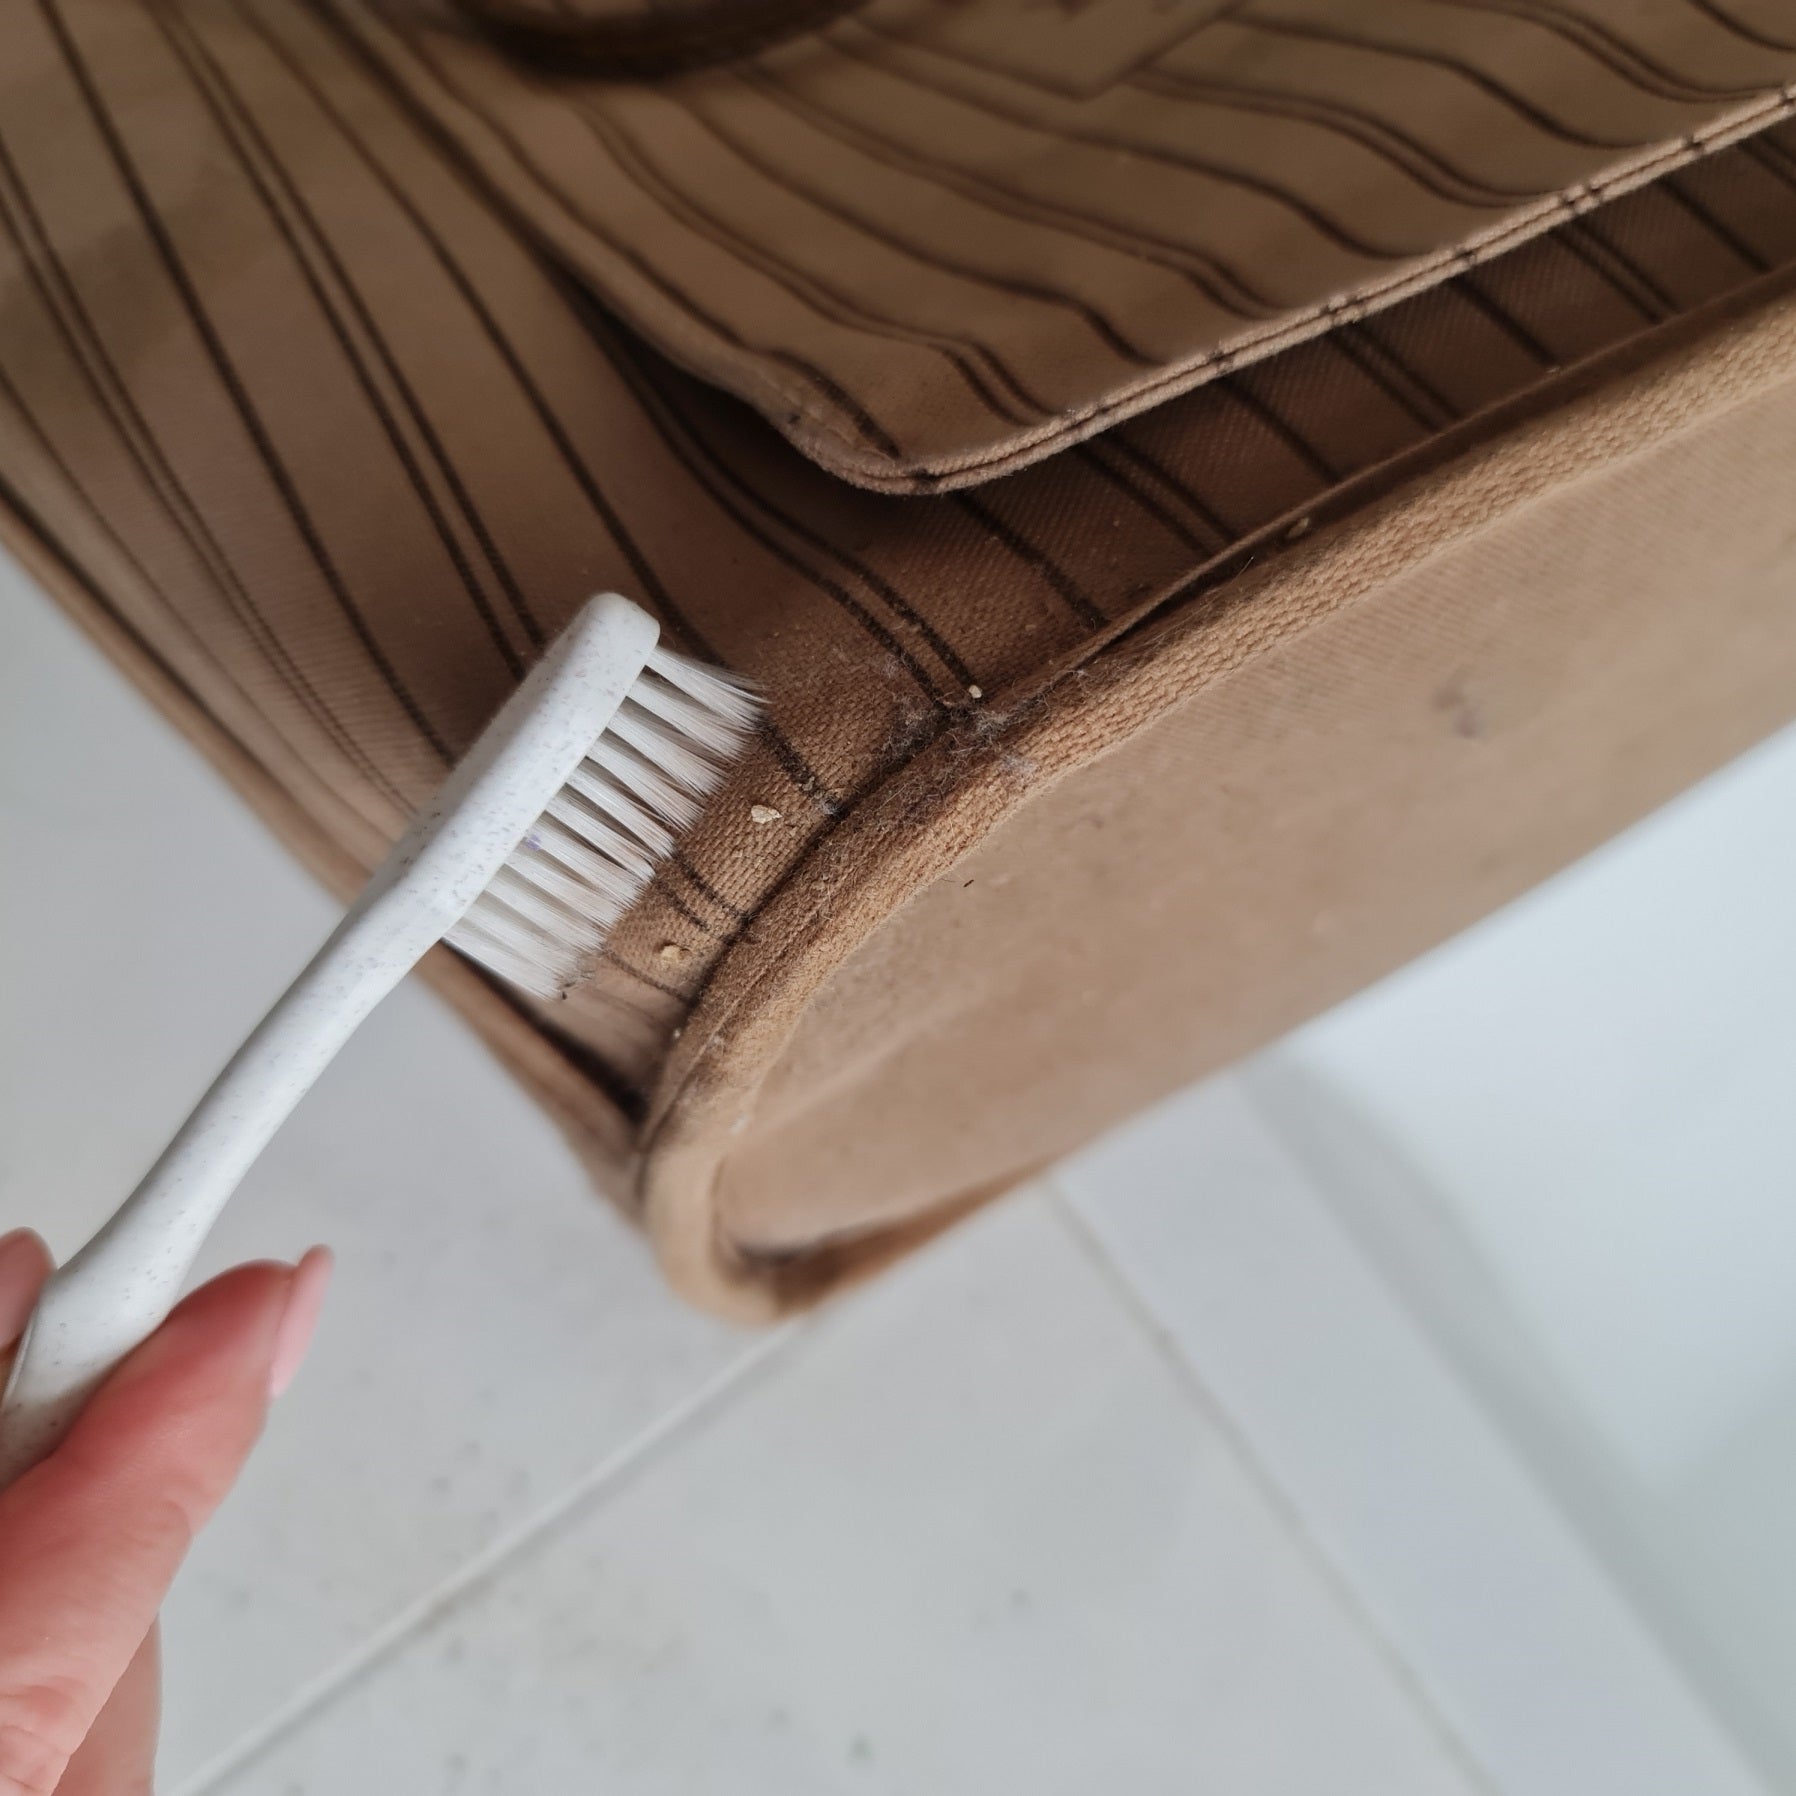 How to clean inside a Louis Vuitton bag 